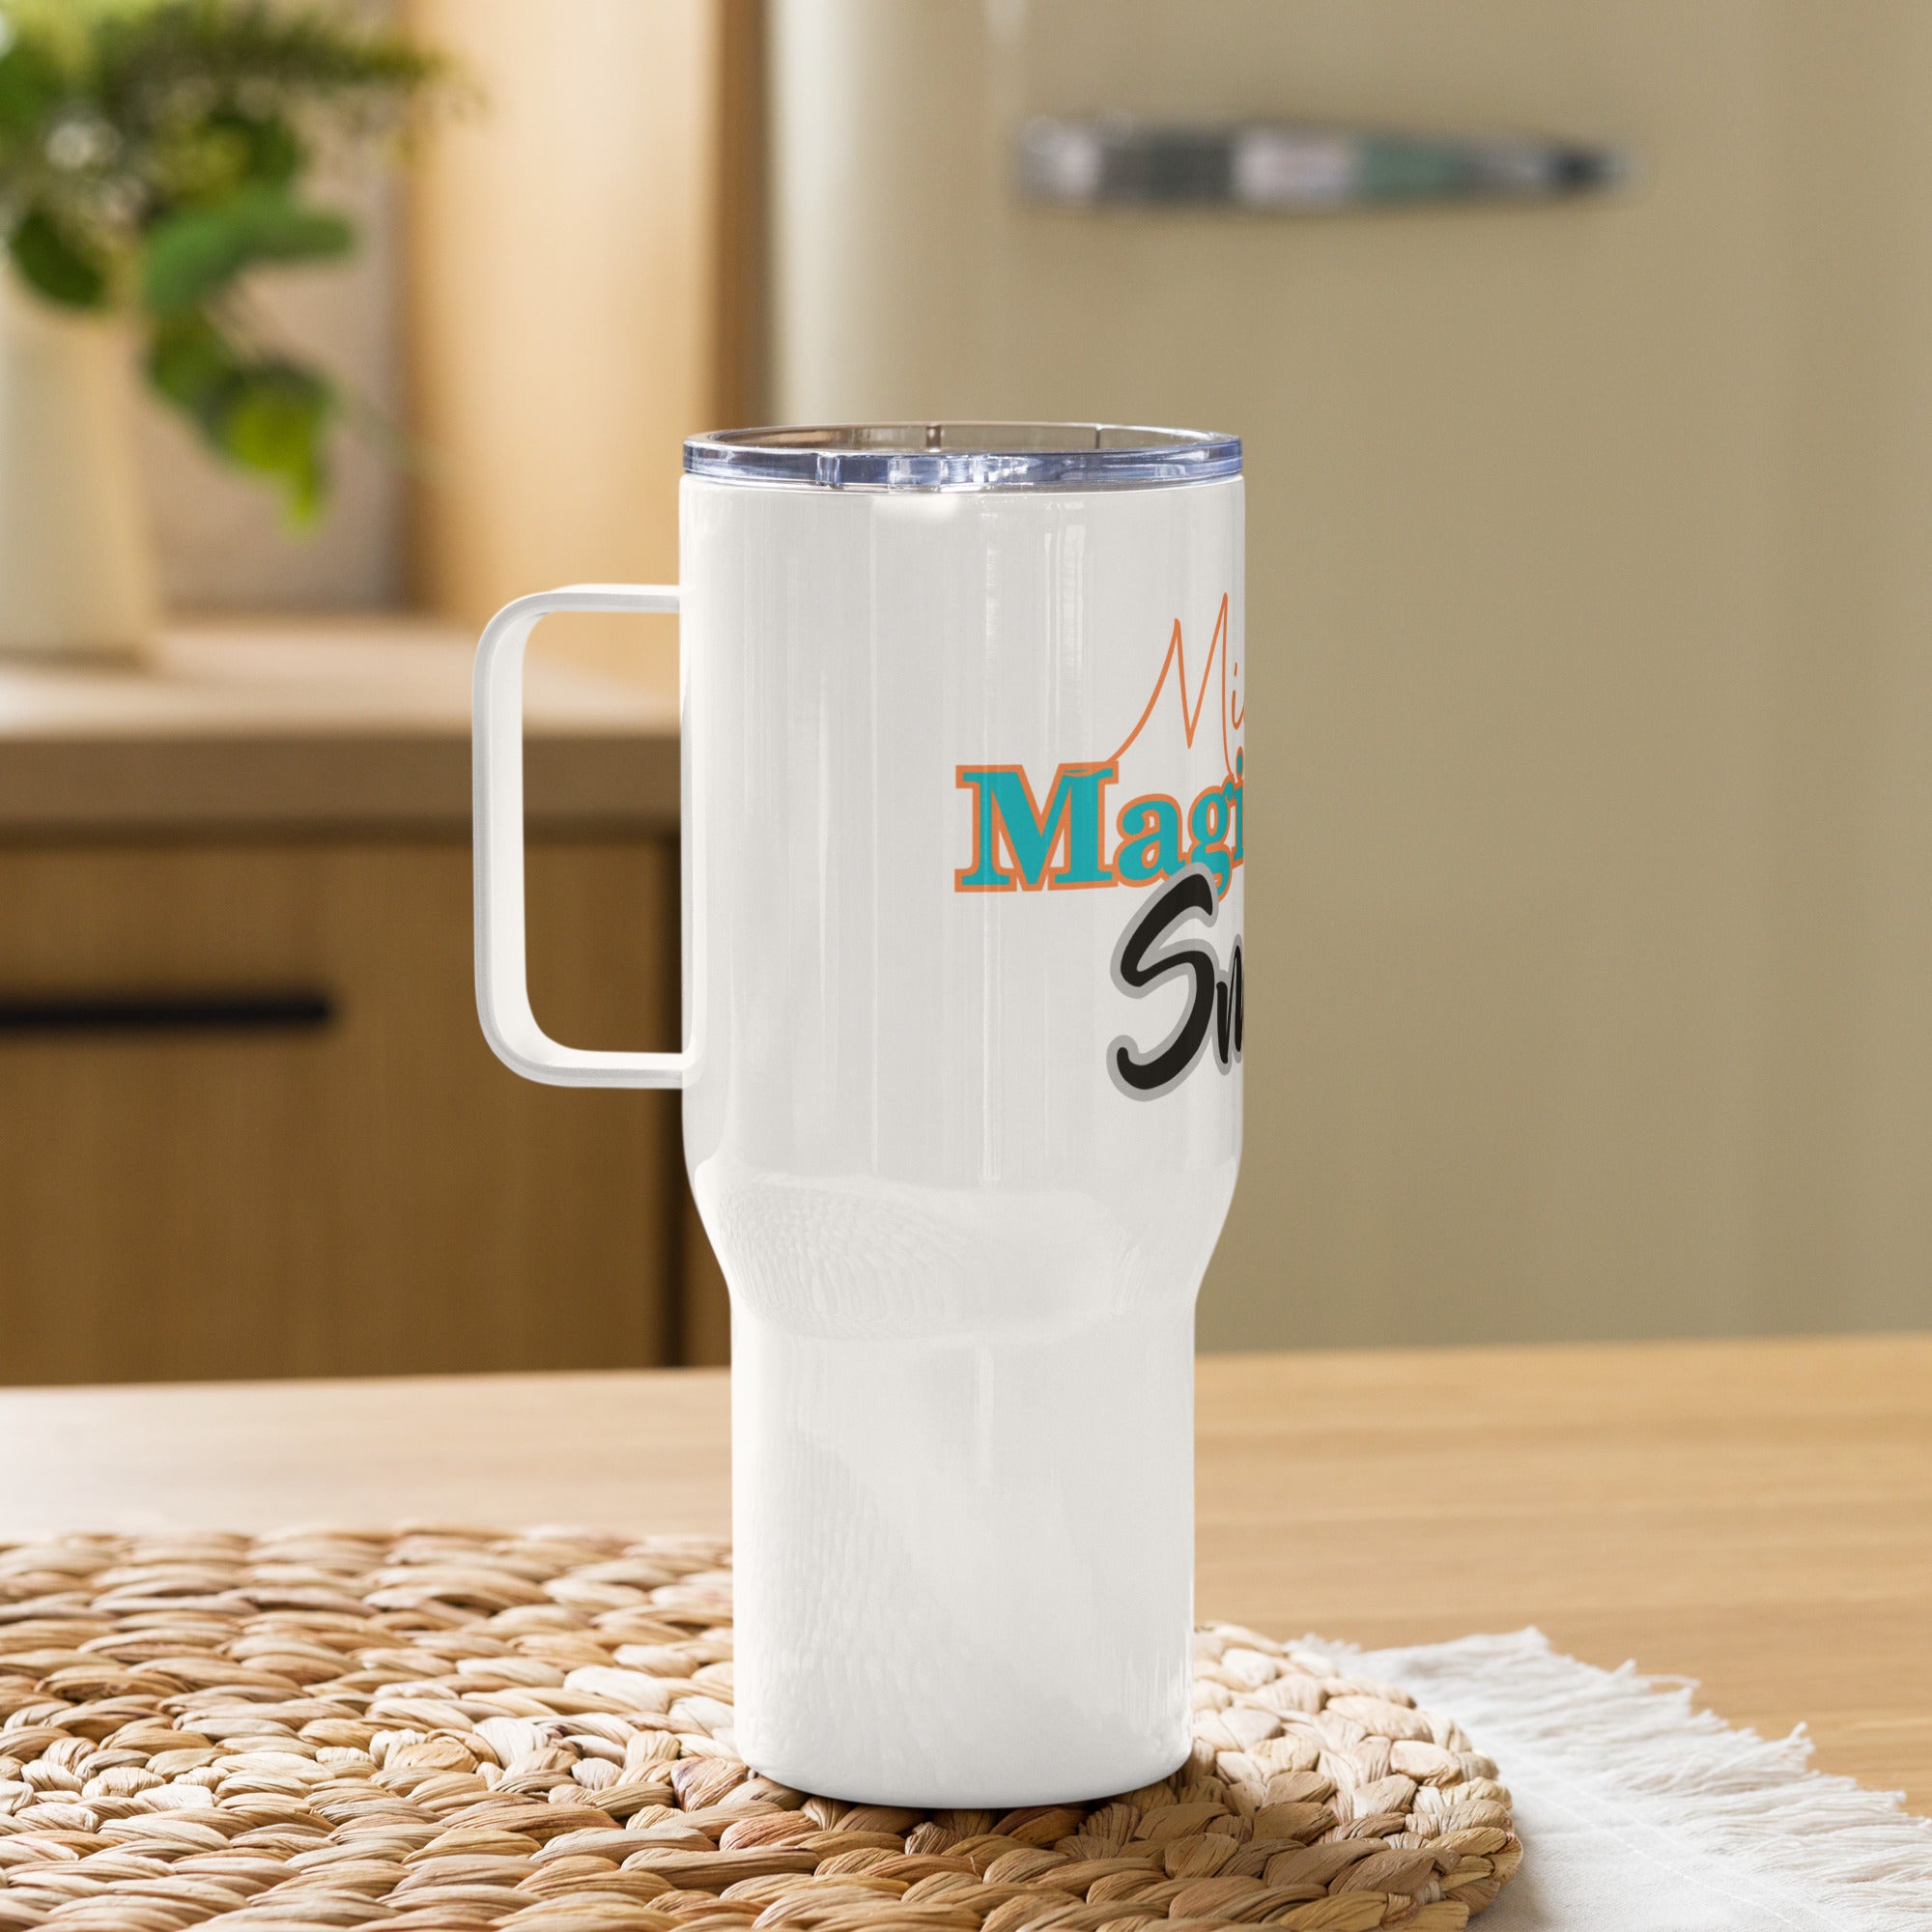 Magic City- Travel mug with a handle